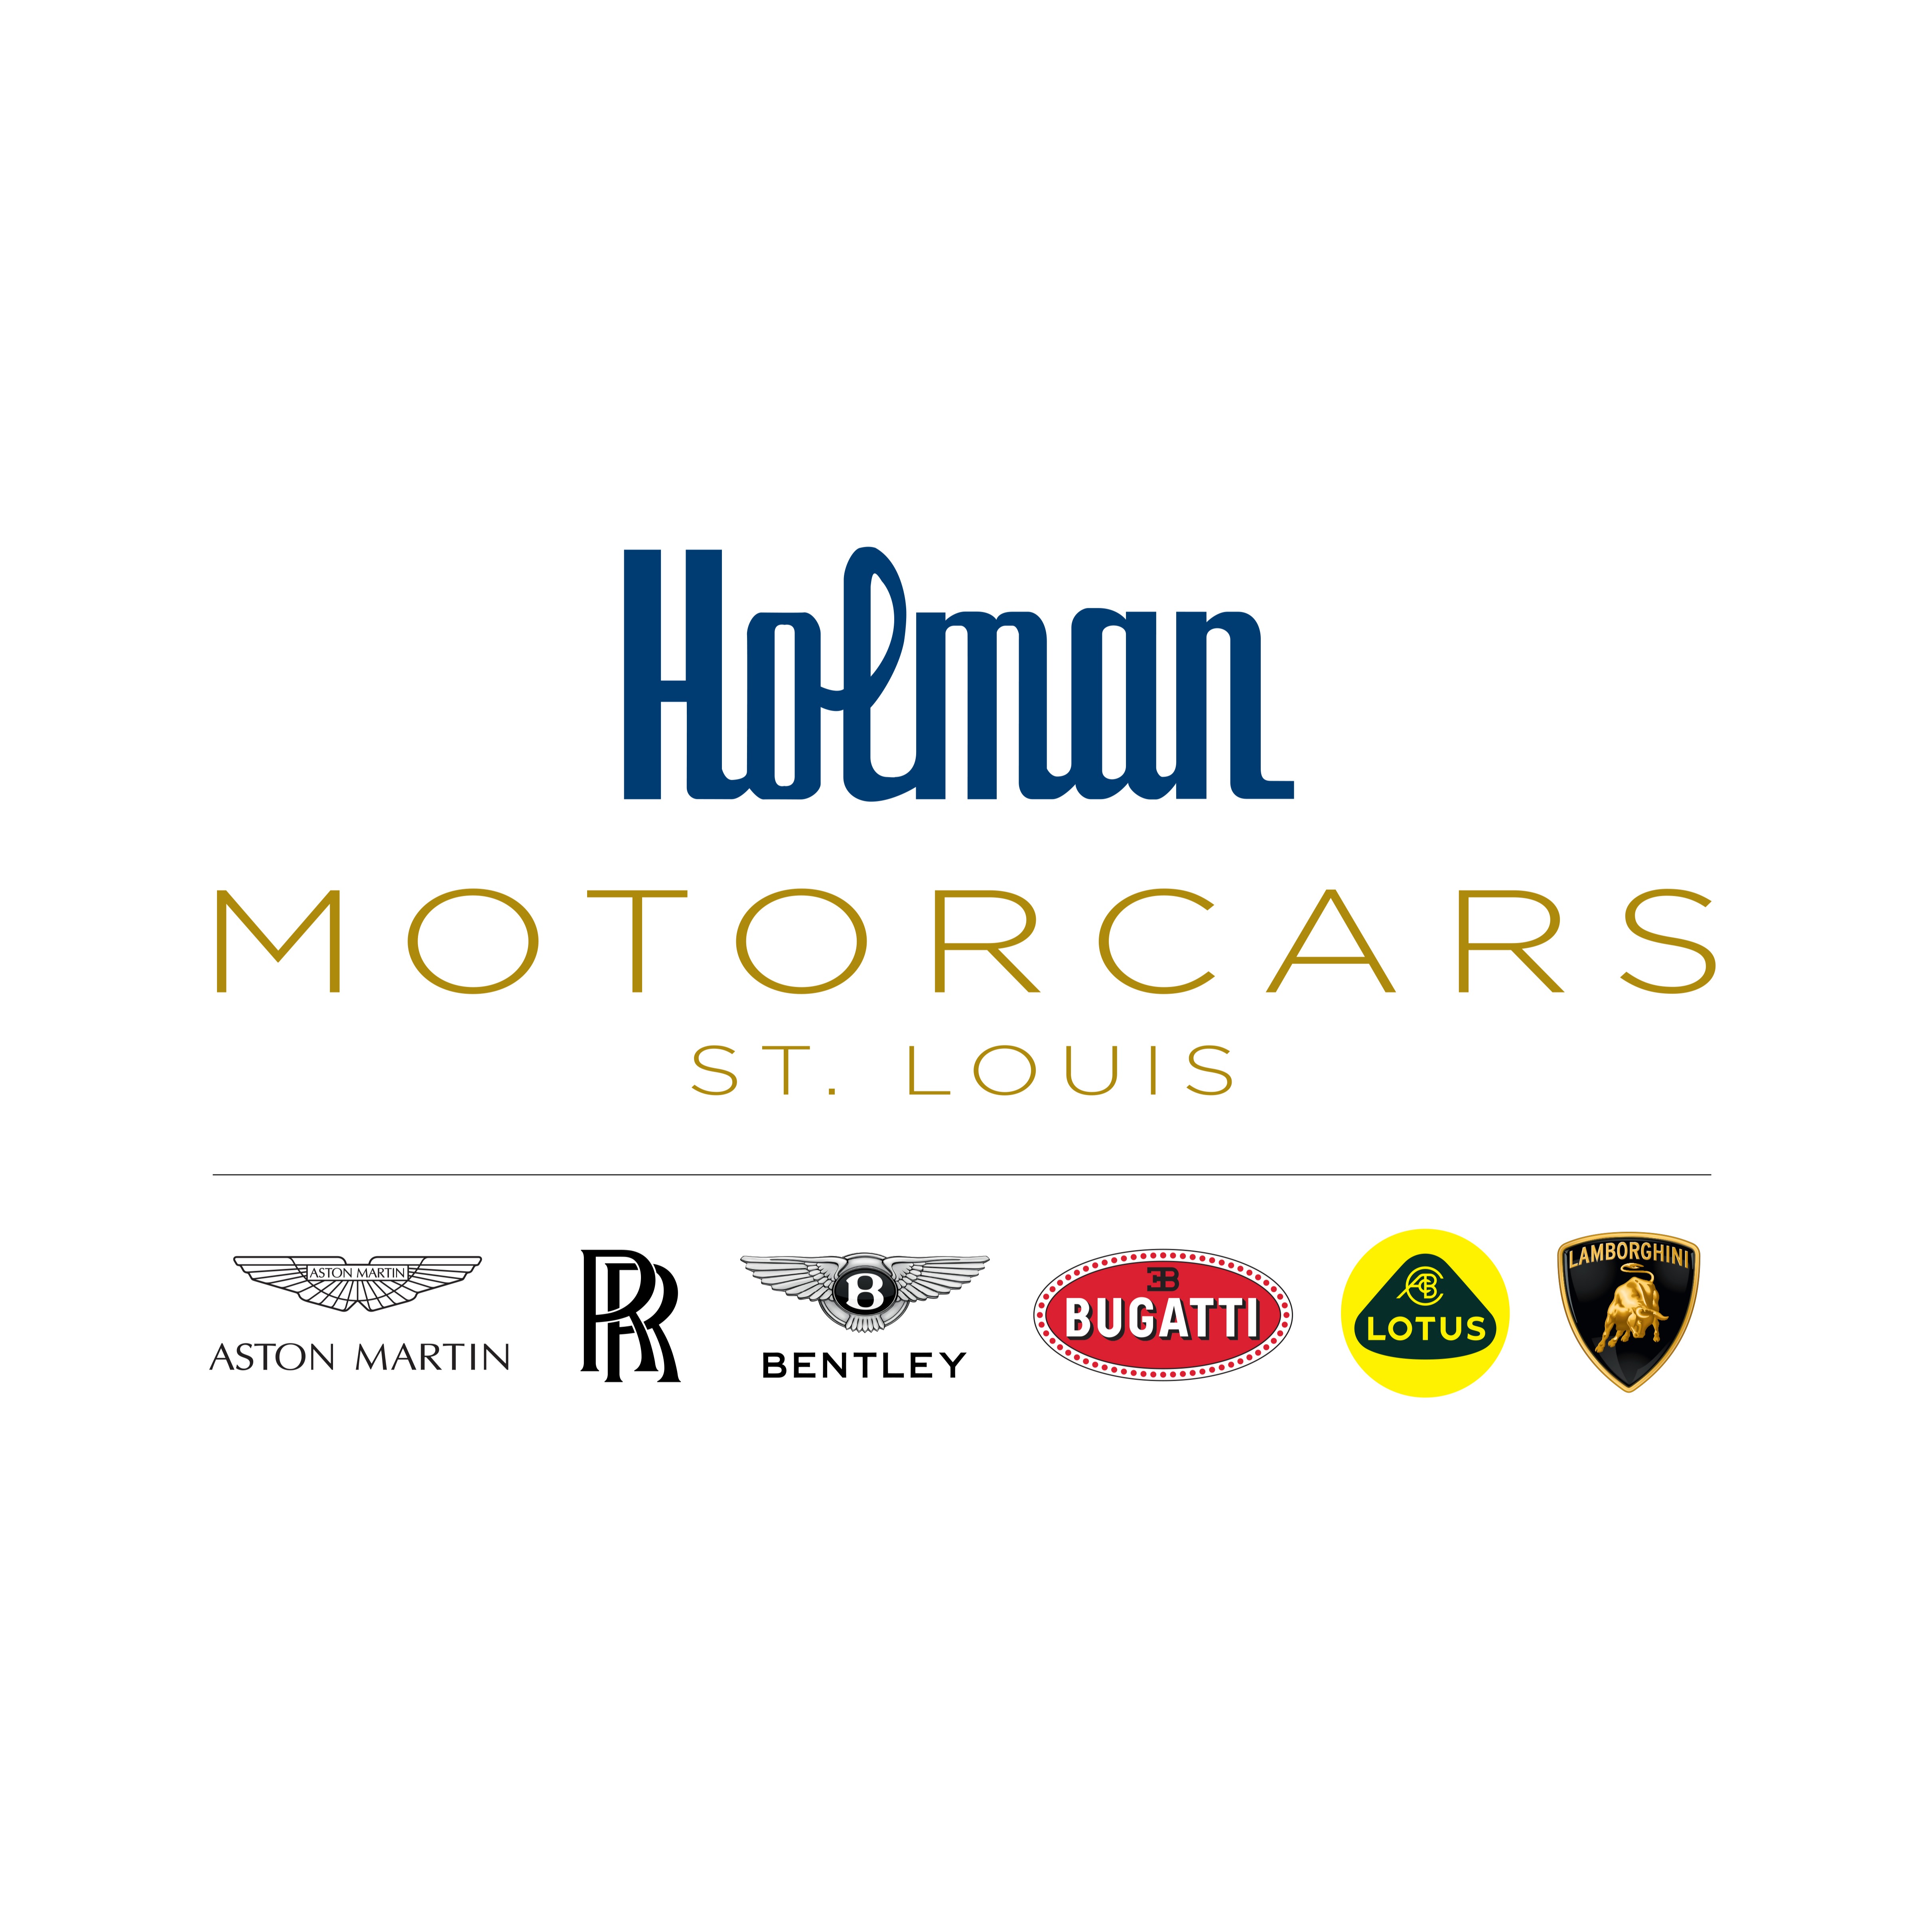 Holman Motorcars St. Louis